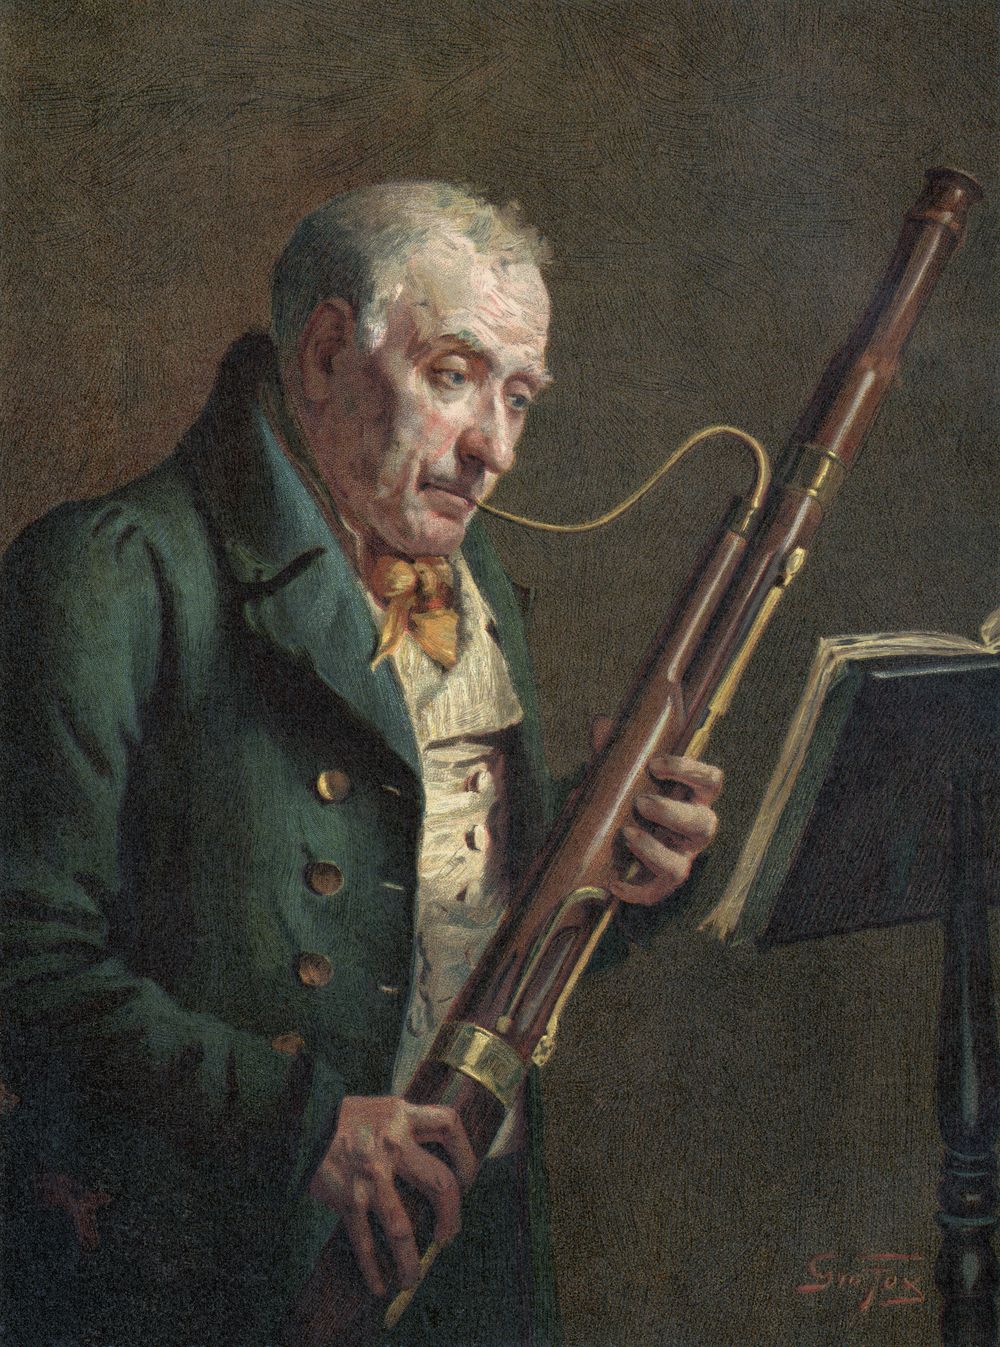 Viktorianischer Mann spielt die Fagott